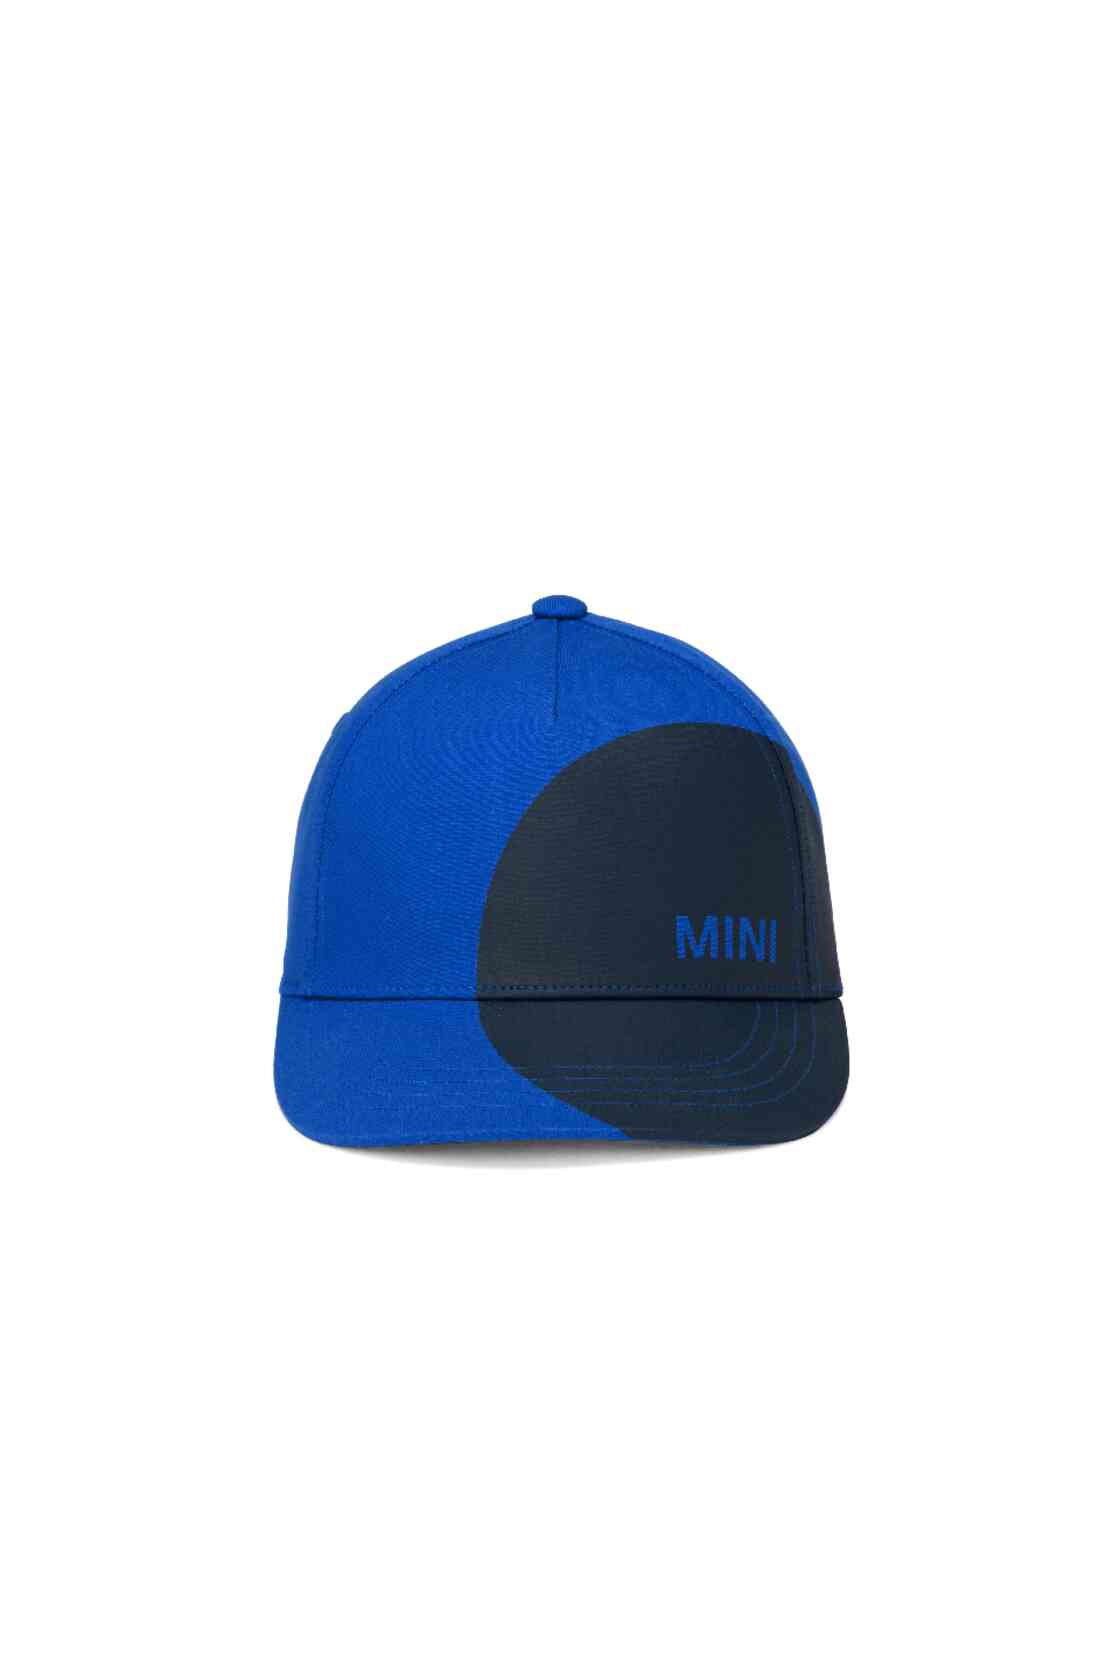 MINI Cap Kids Car Face Detail Blazing Blue